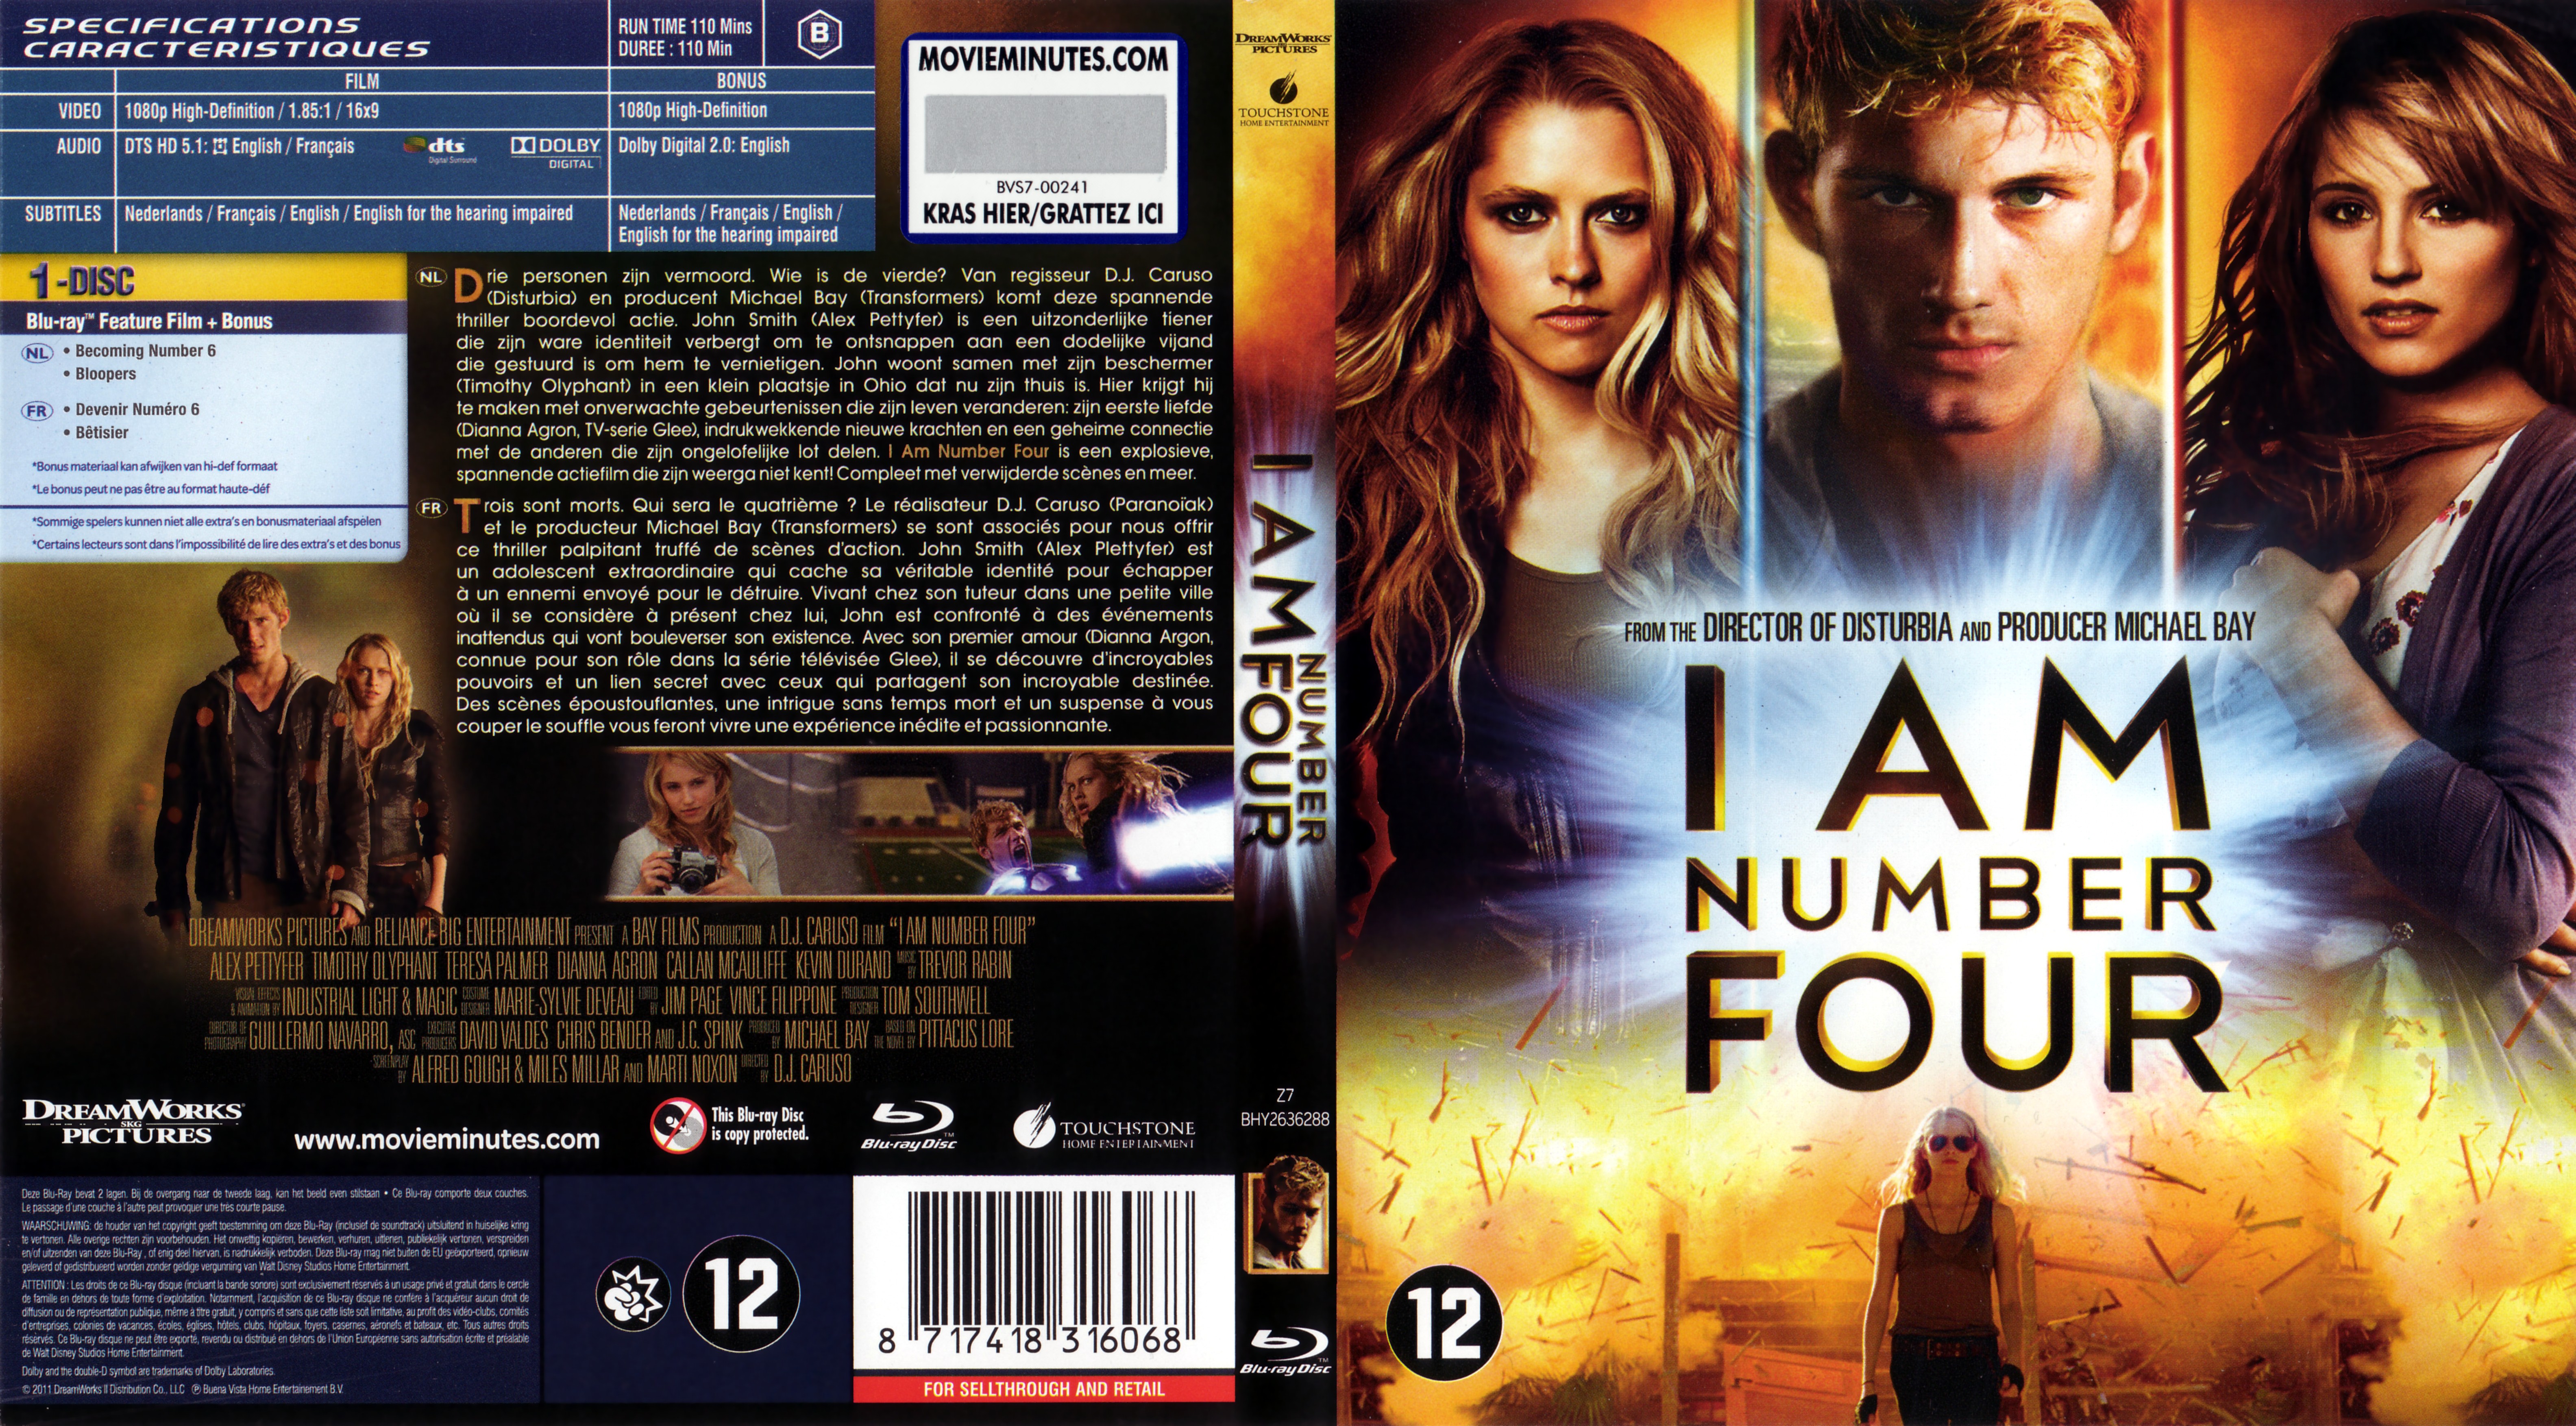 Jaquette DVD Numro quatre - I am number four (BLU-RAY)